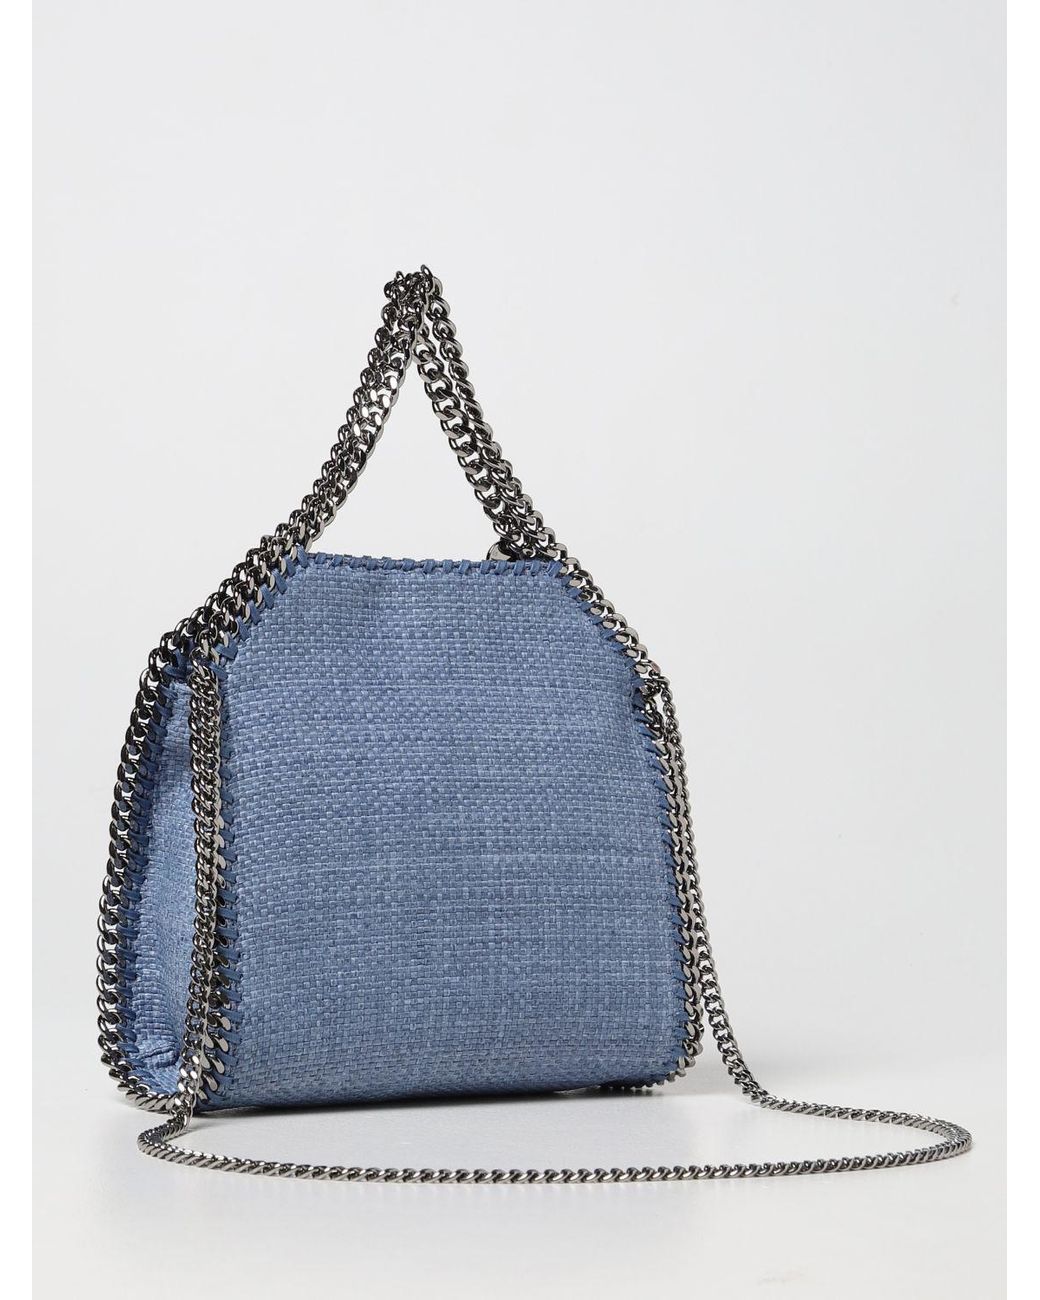 Stella McCartney Falabella Bag In Woven Canvas in Blue | Lyst